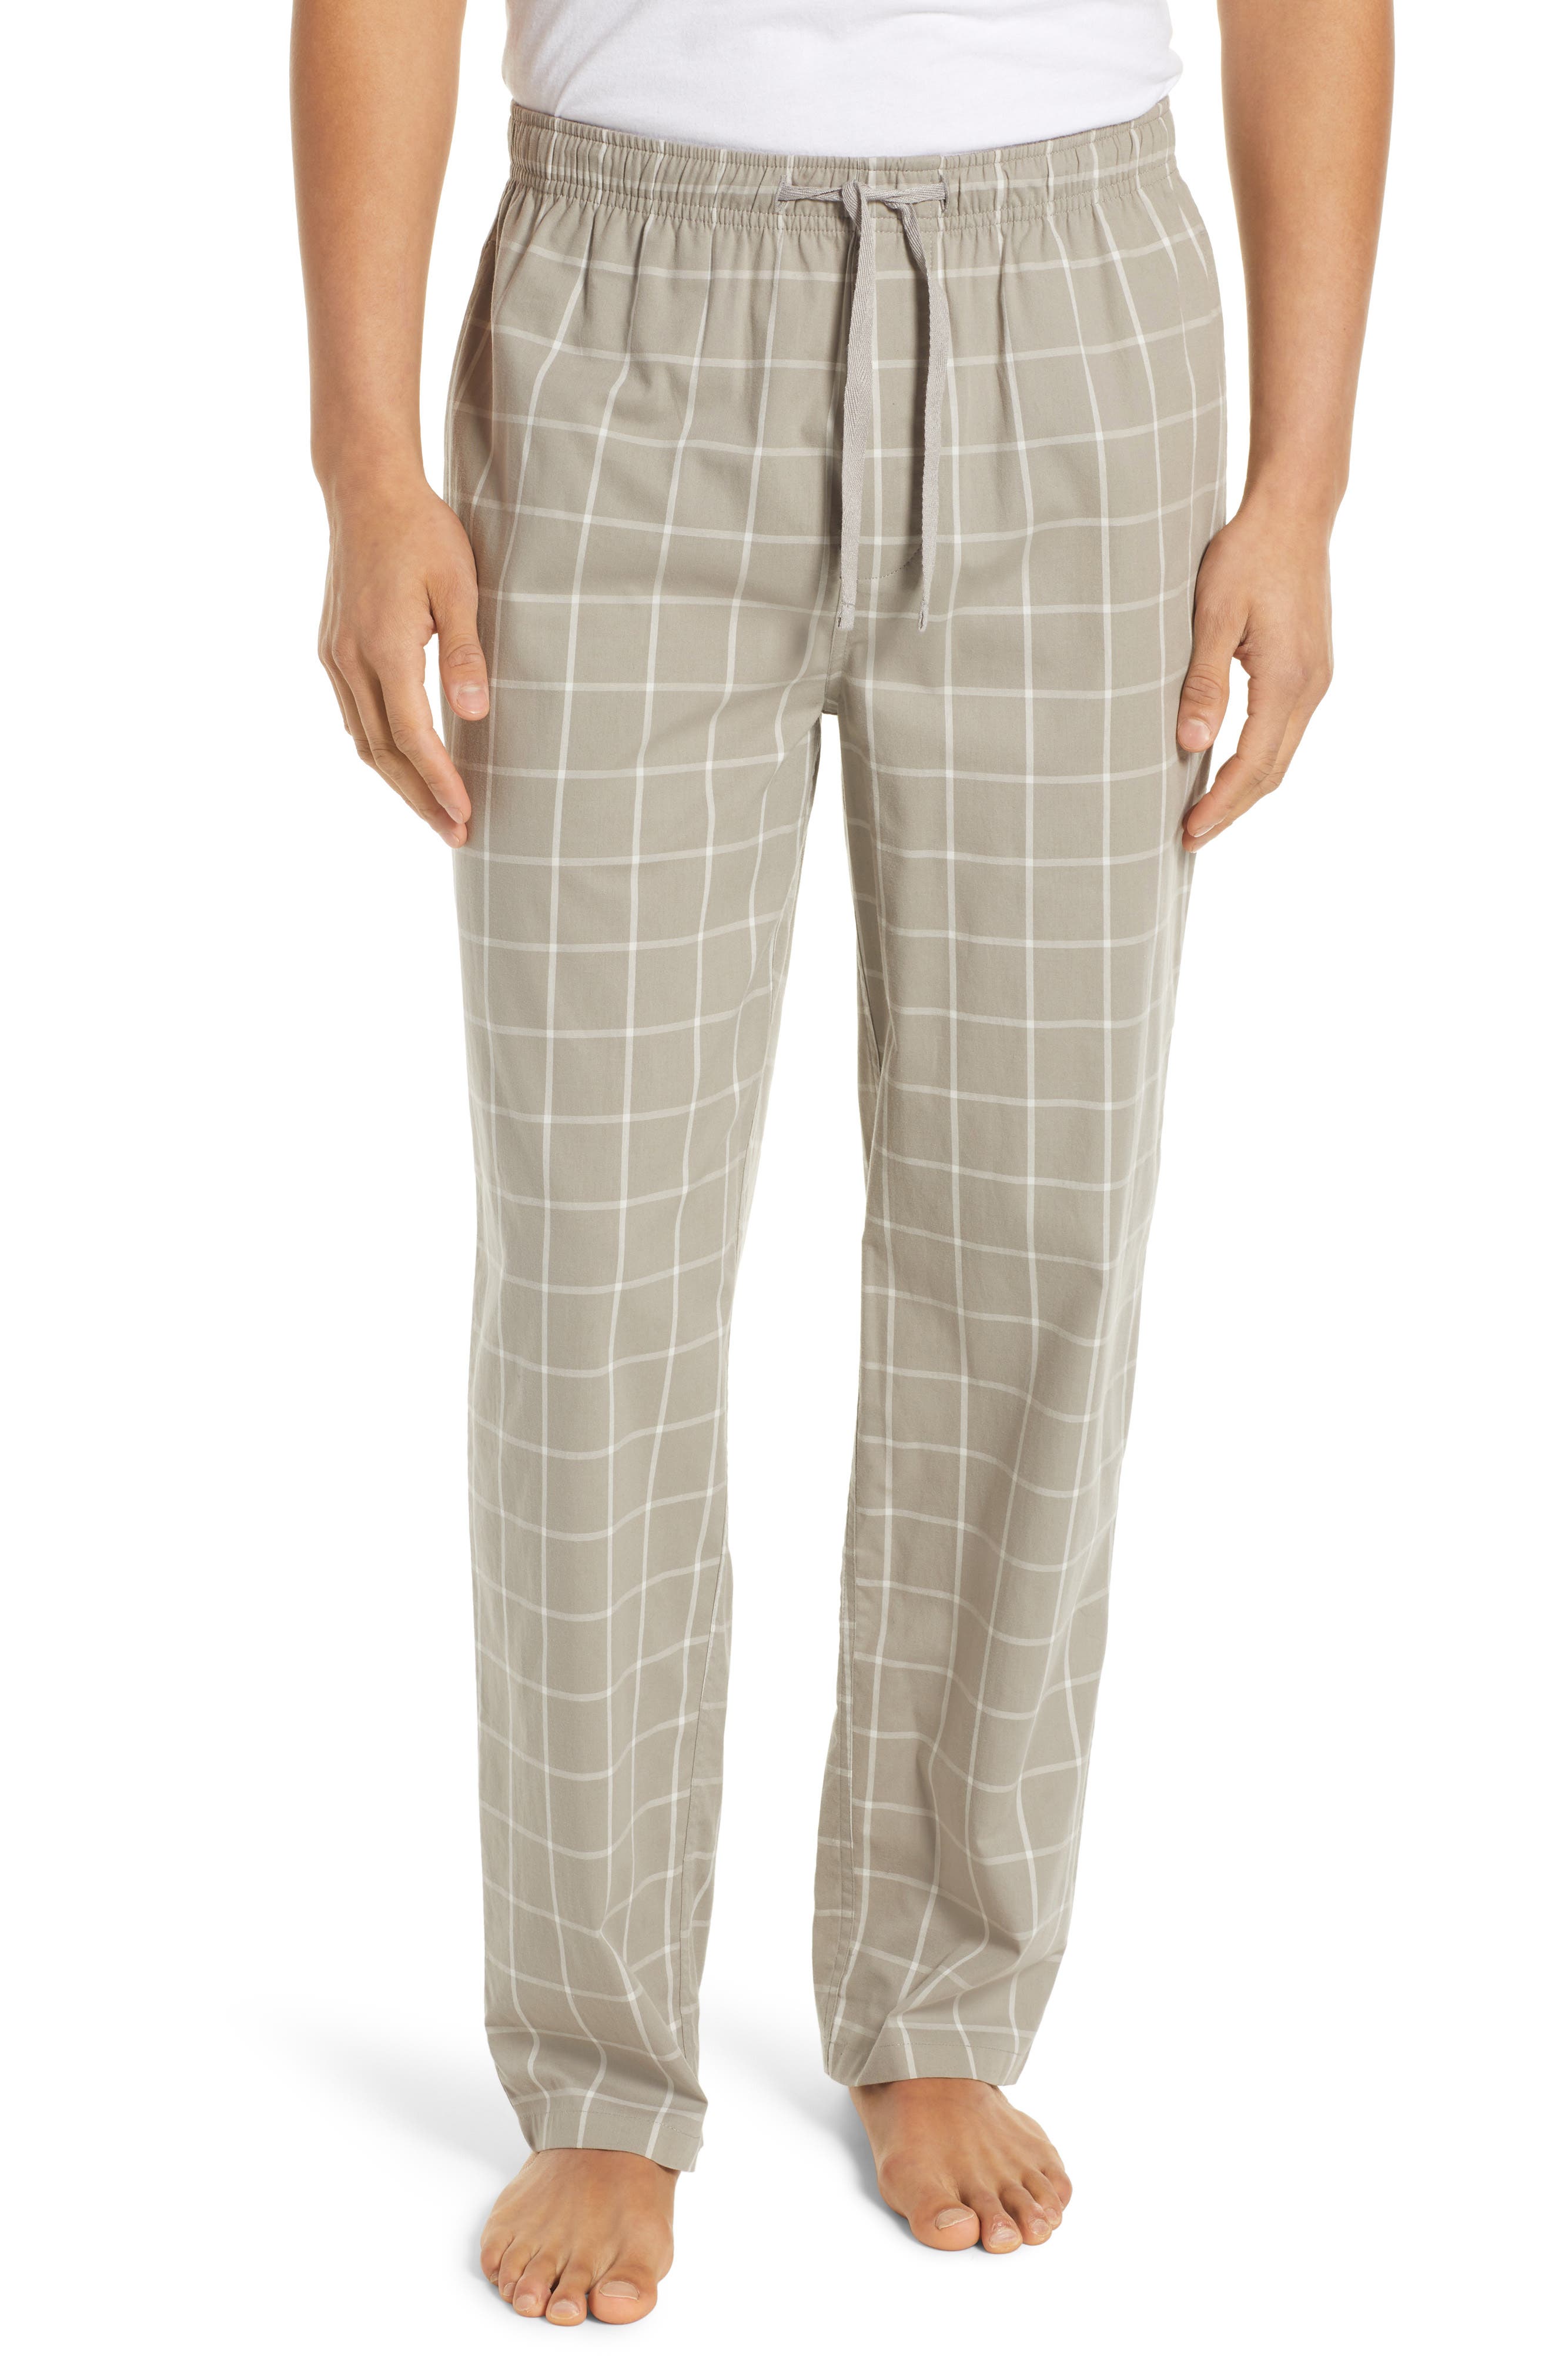 Small Tall, Heather Grey Elegance Clothing Mens Pajama Set 